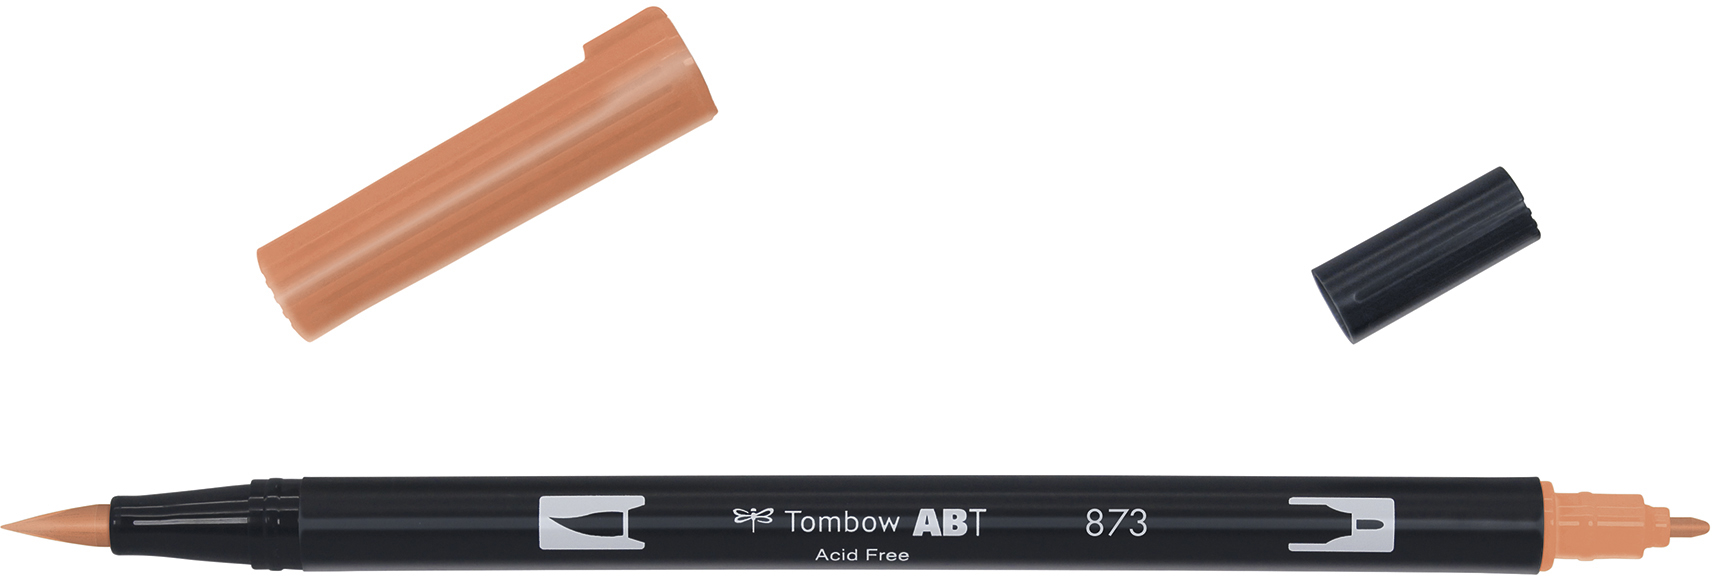 TOMBOW Dual Brush Pen ABT 873 corail corail